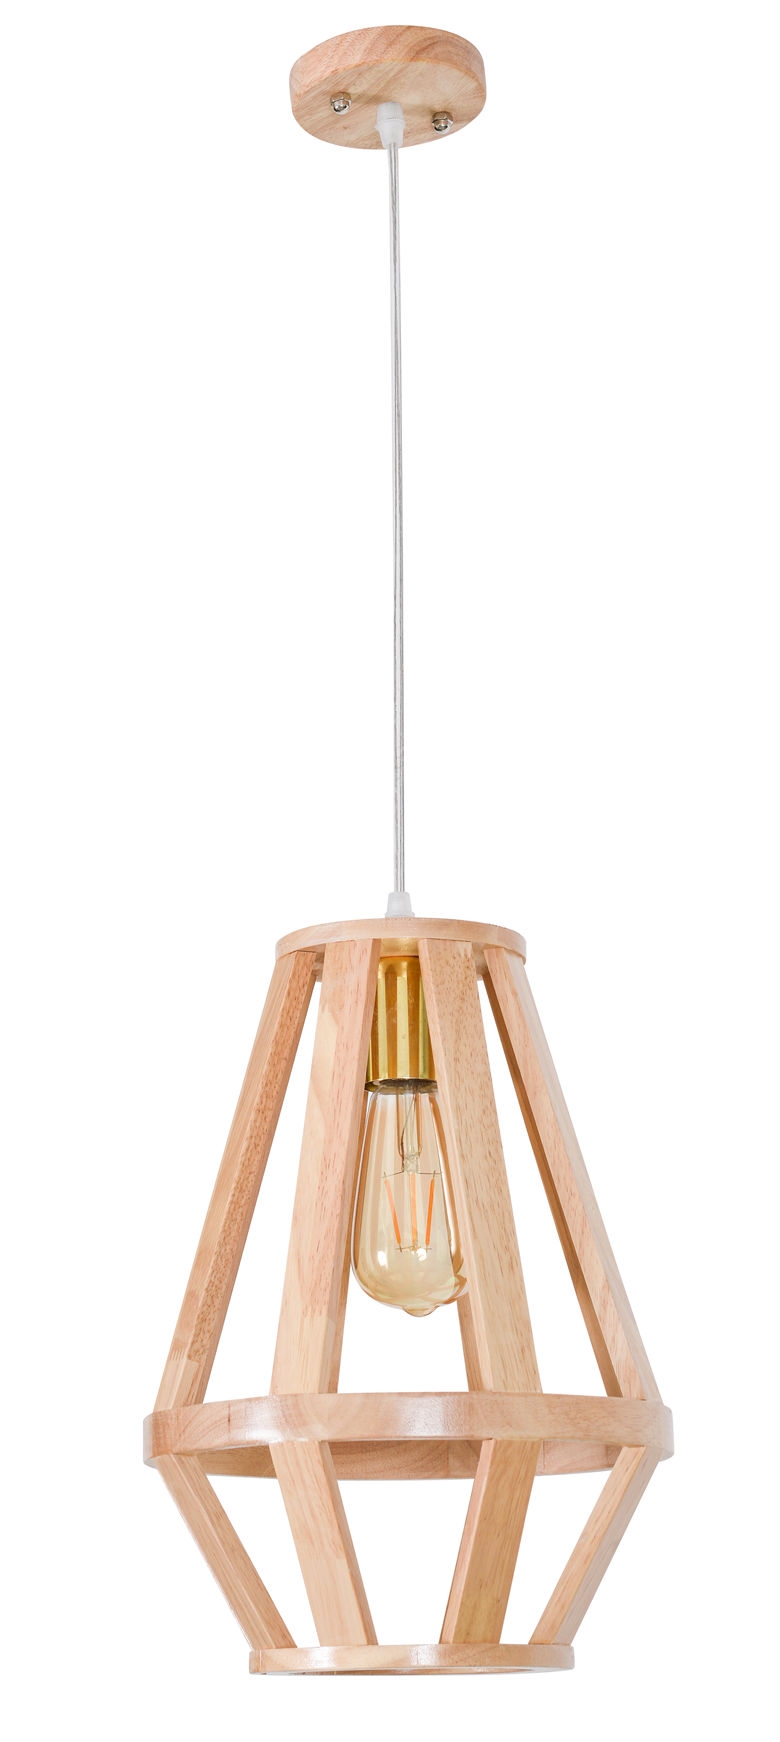 Hot sale Wooden Pendant Lamp No.0829-1 Suoling lighting